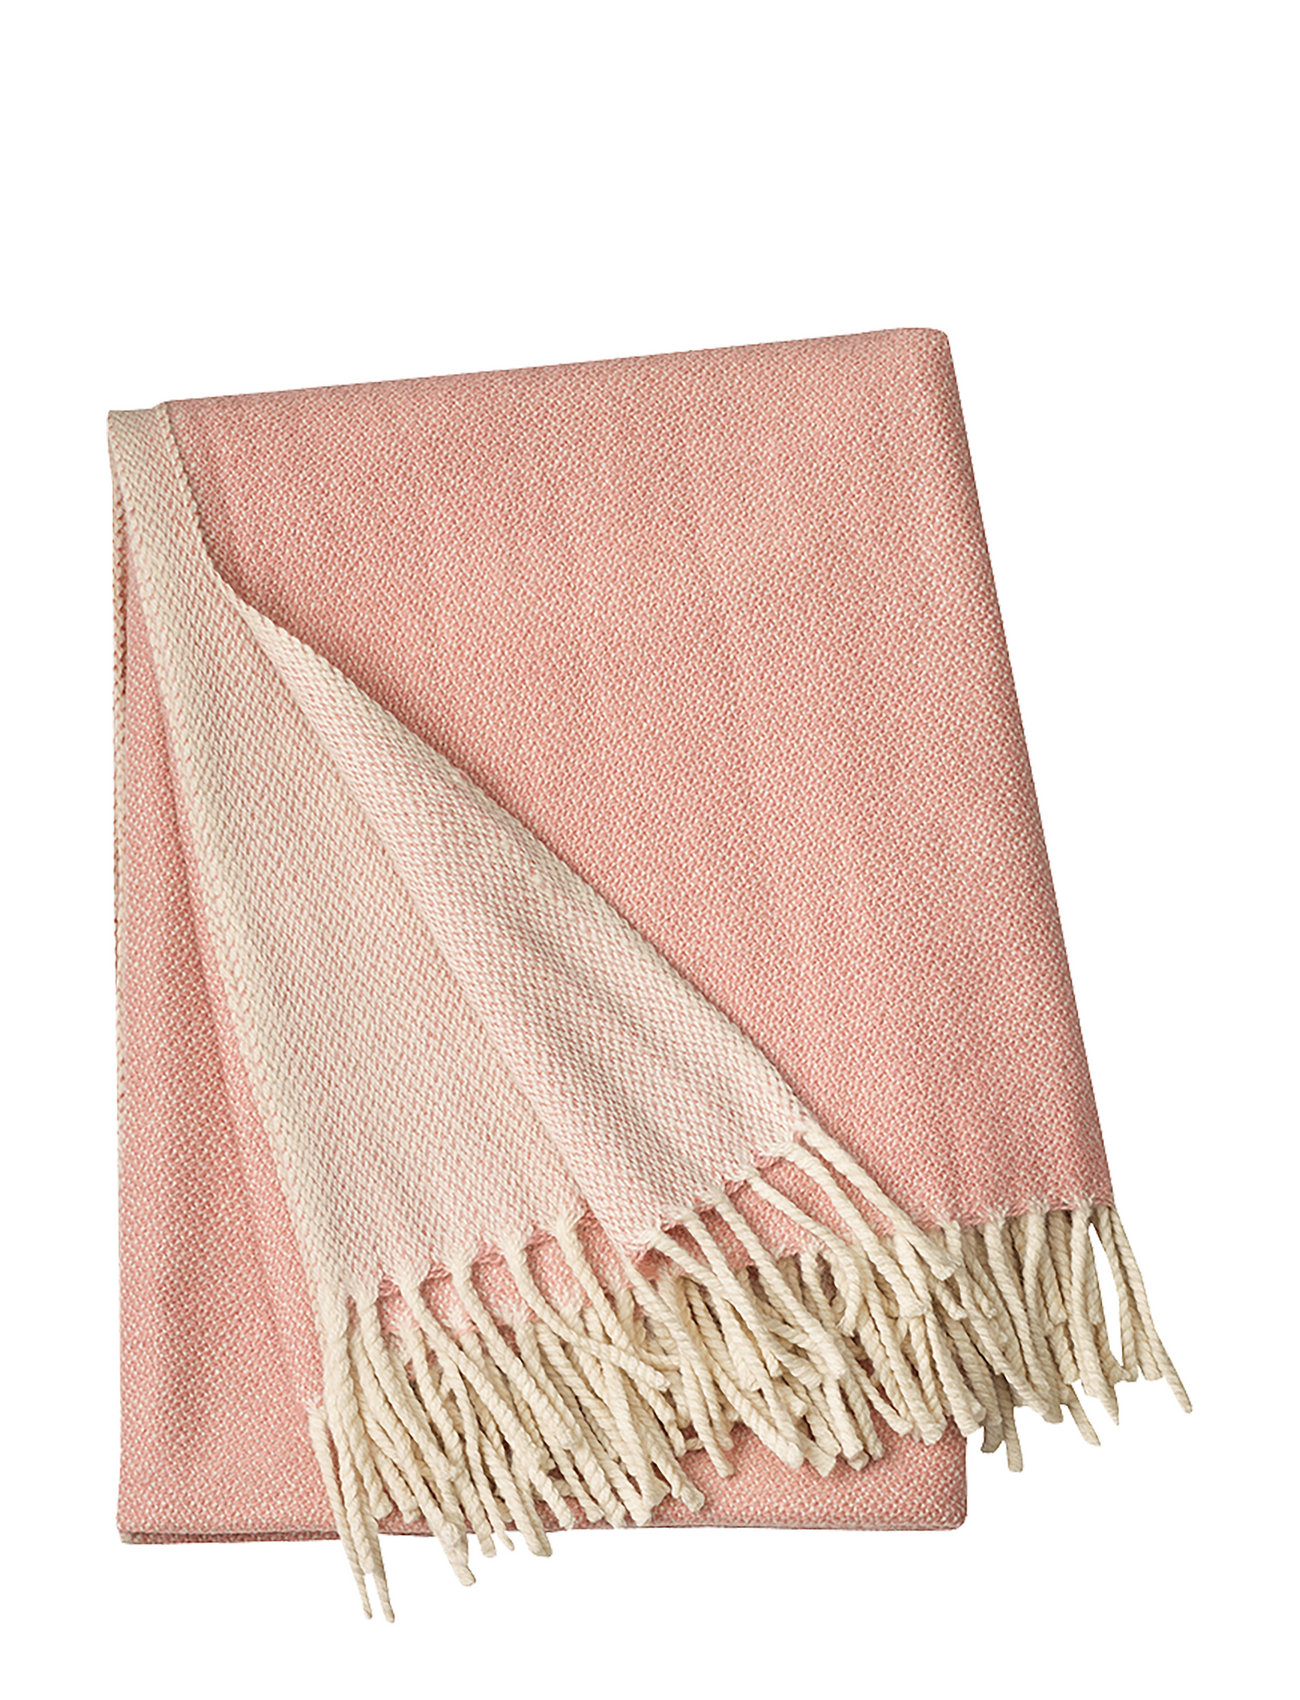 Bogart Throw Home Textiles Cushions & Blankets Blankets & Throws Pink LINUM